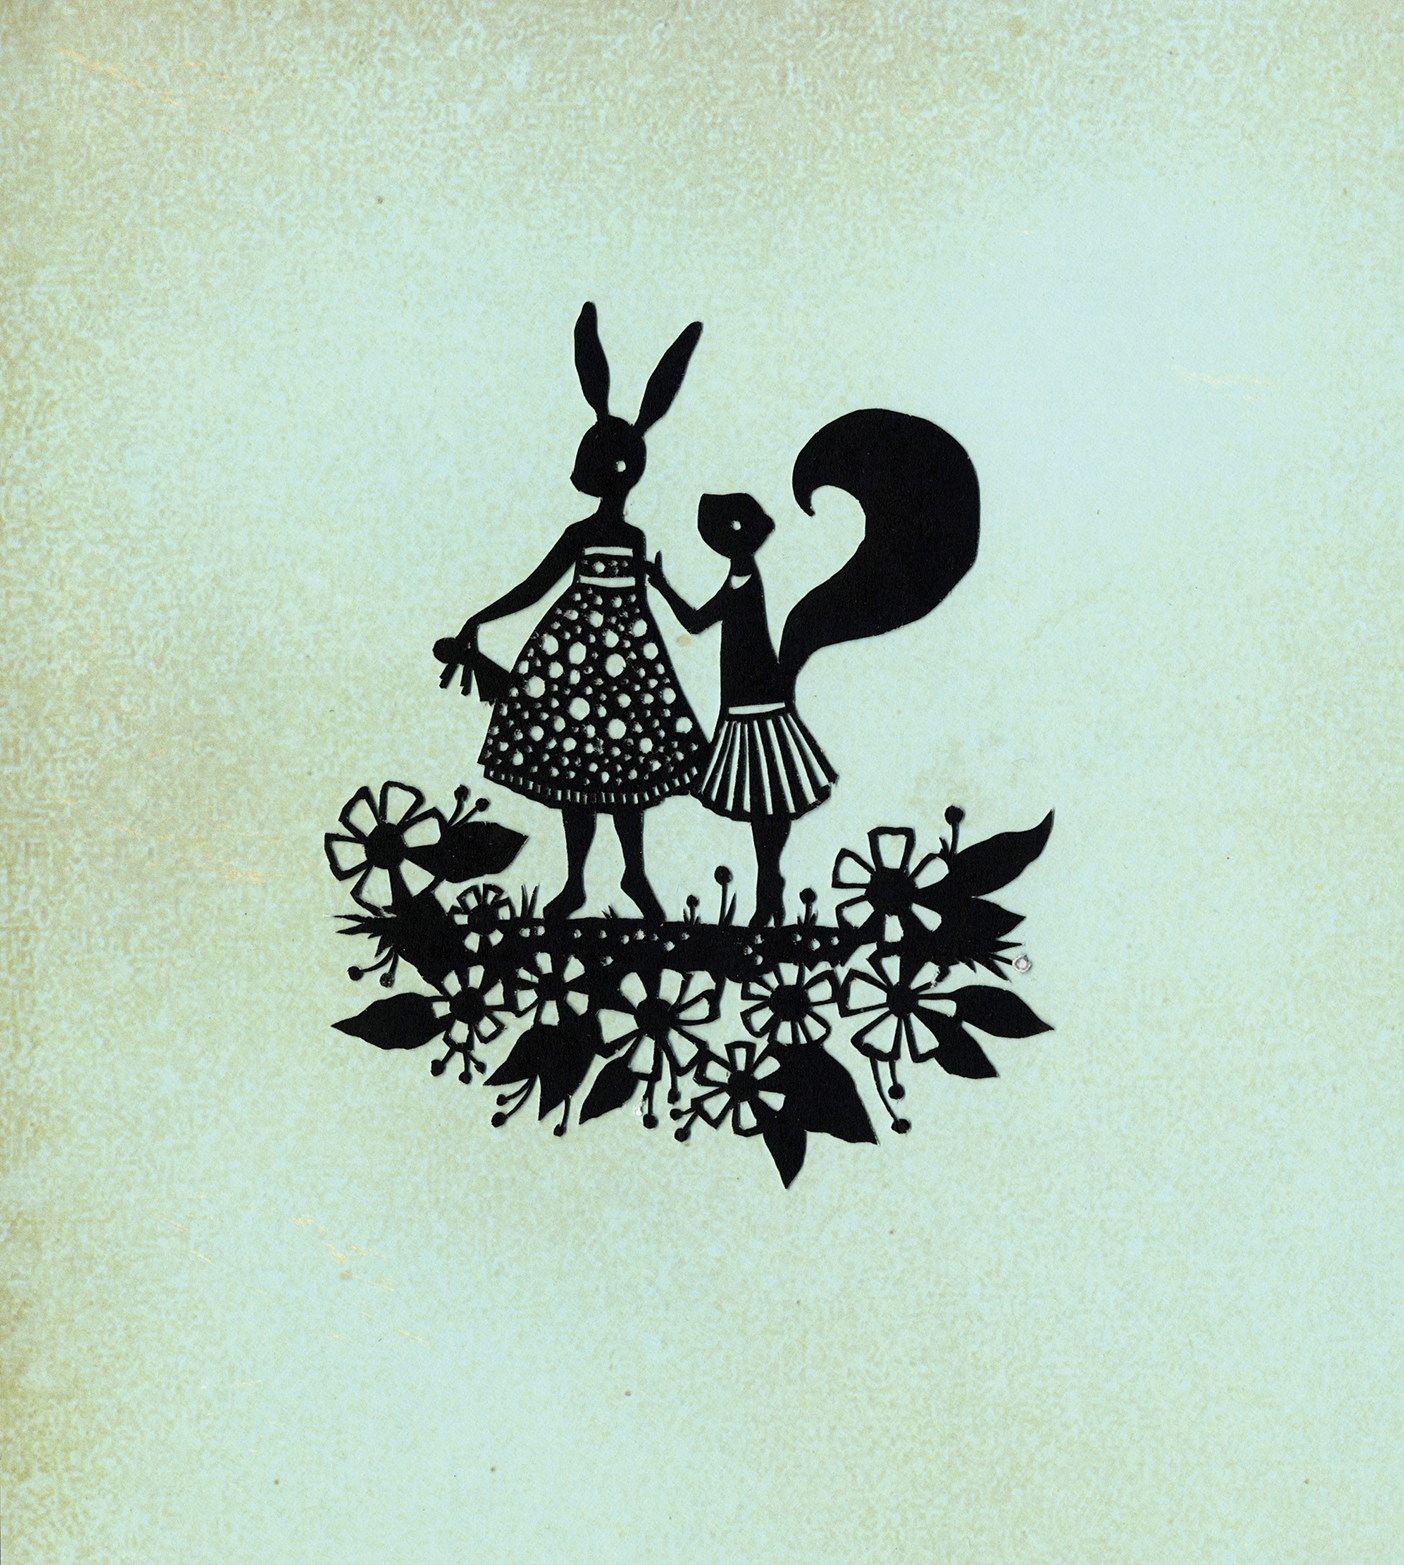 A papercut art piece depicting a rabbit and squirrel